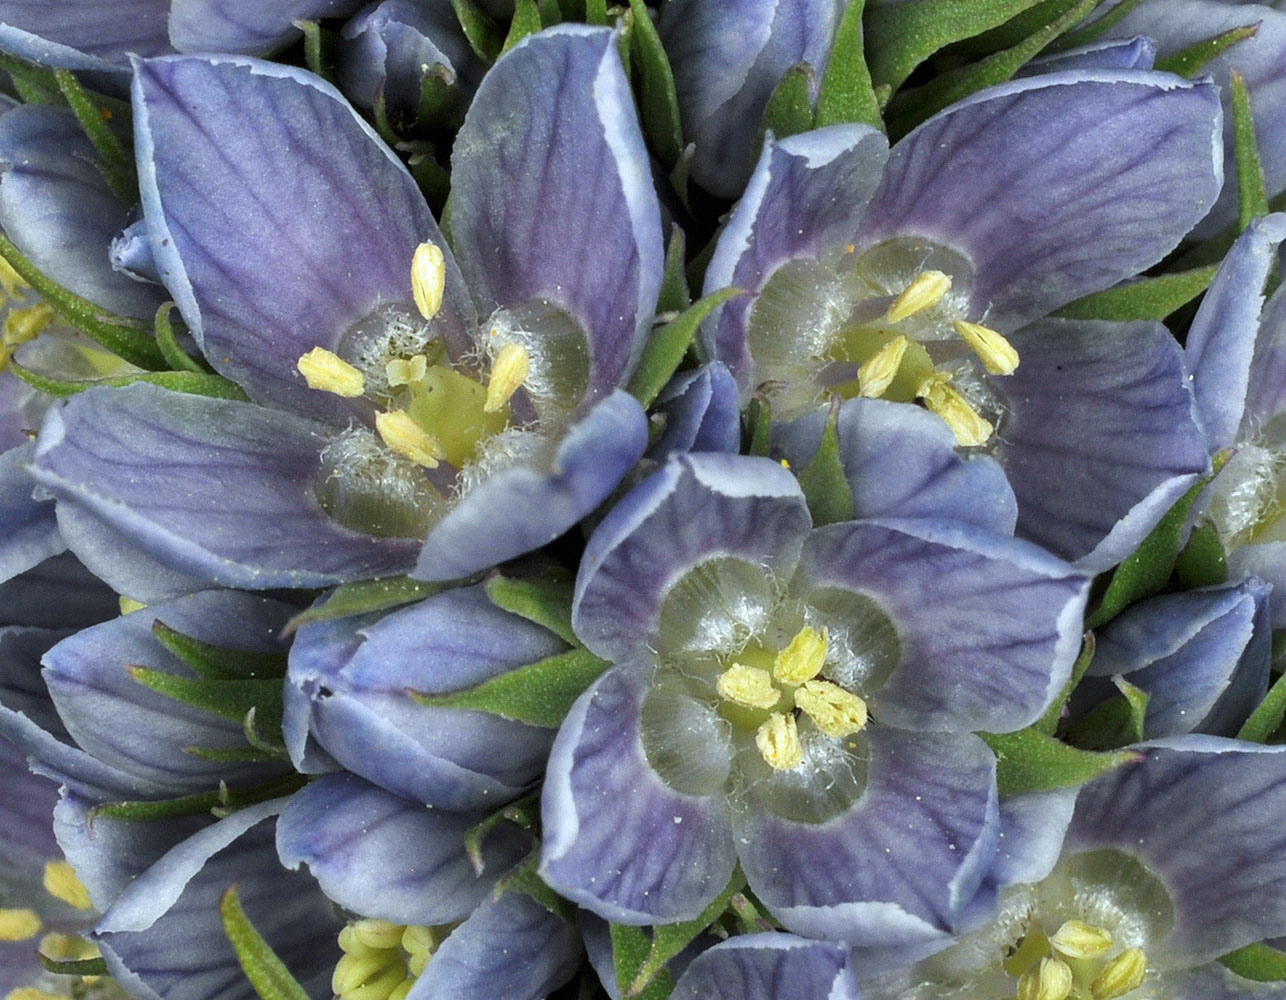 Flora of Eastern Washington Image: Frasera fastigiata